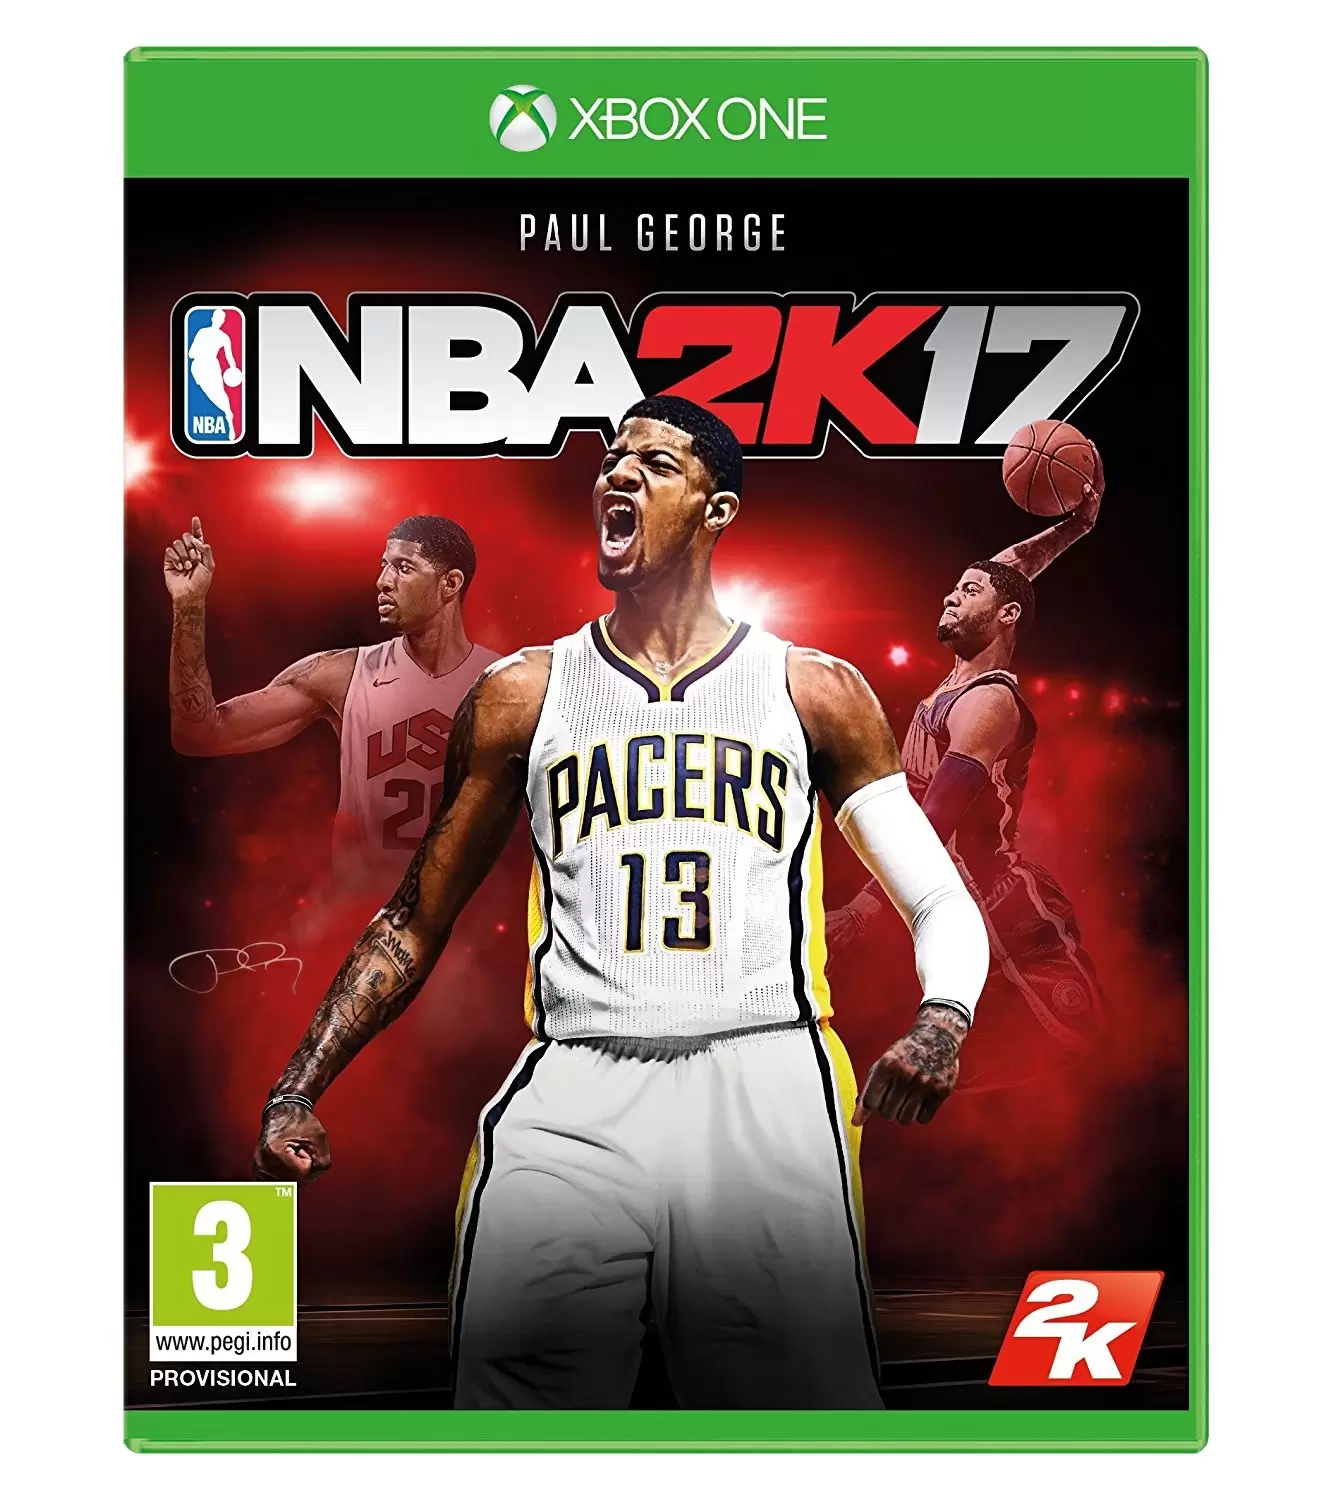 XBOX One Games - NBA 2K17